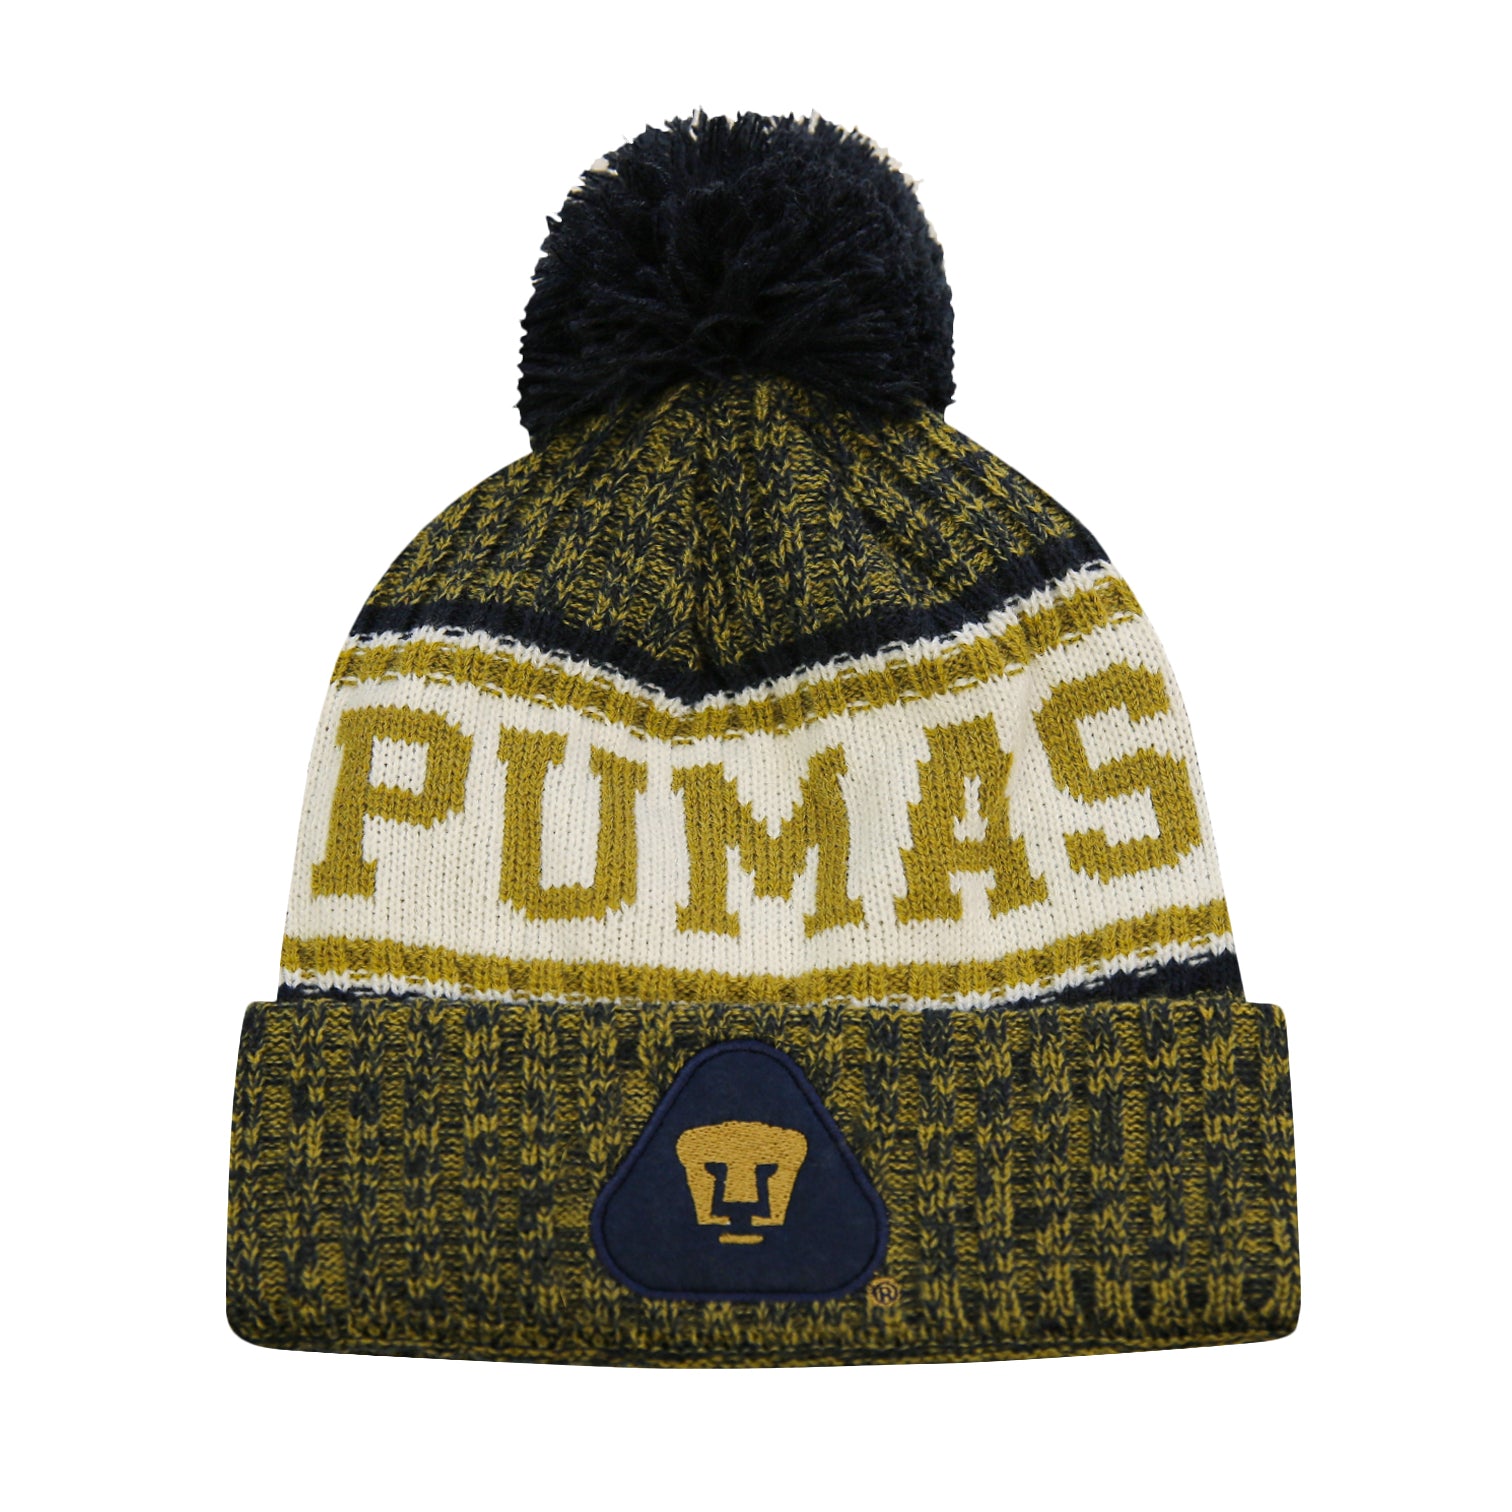 Pumas UNAM Crowned Beanie by Sports